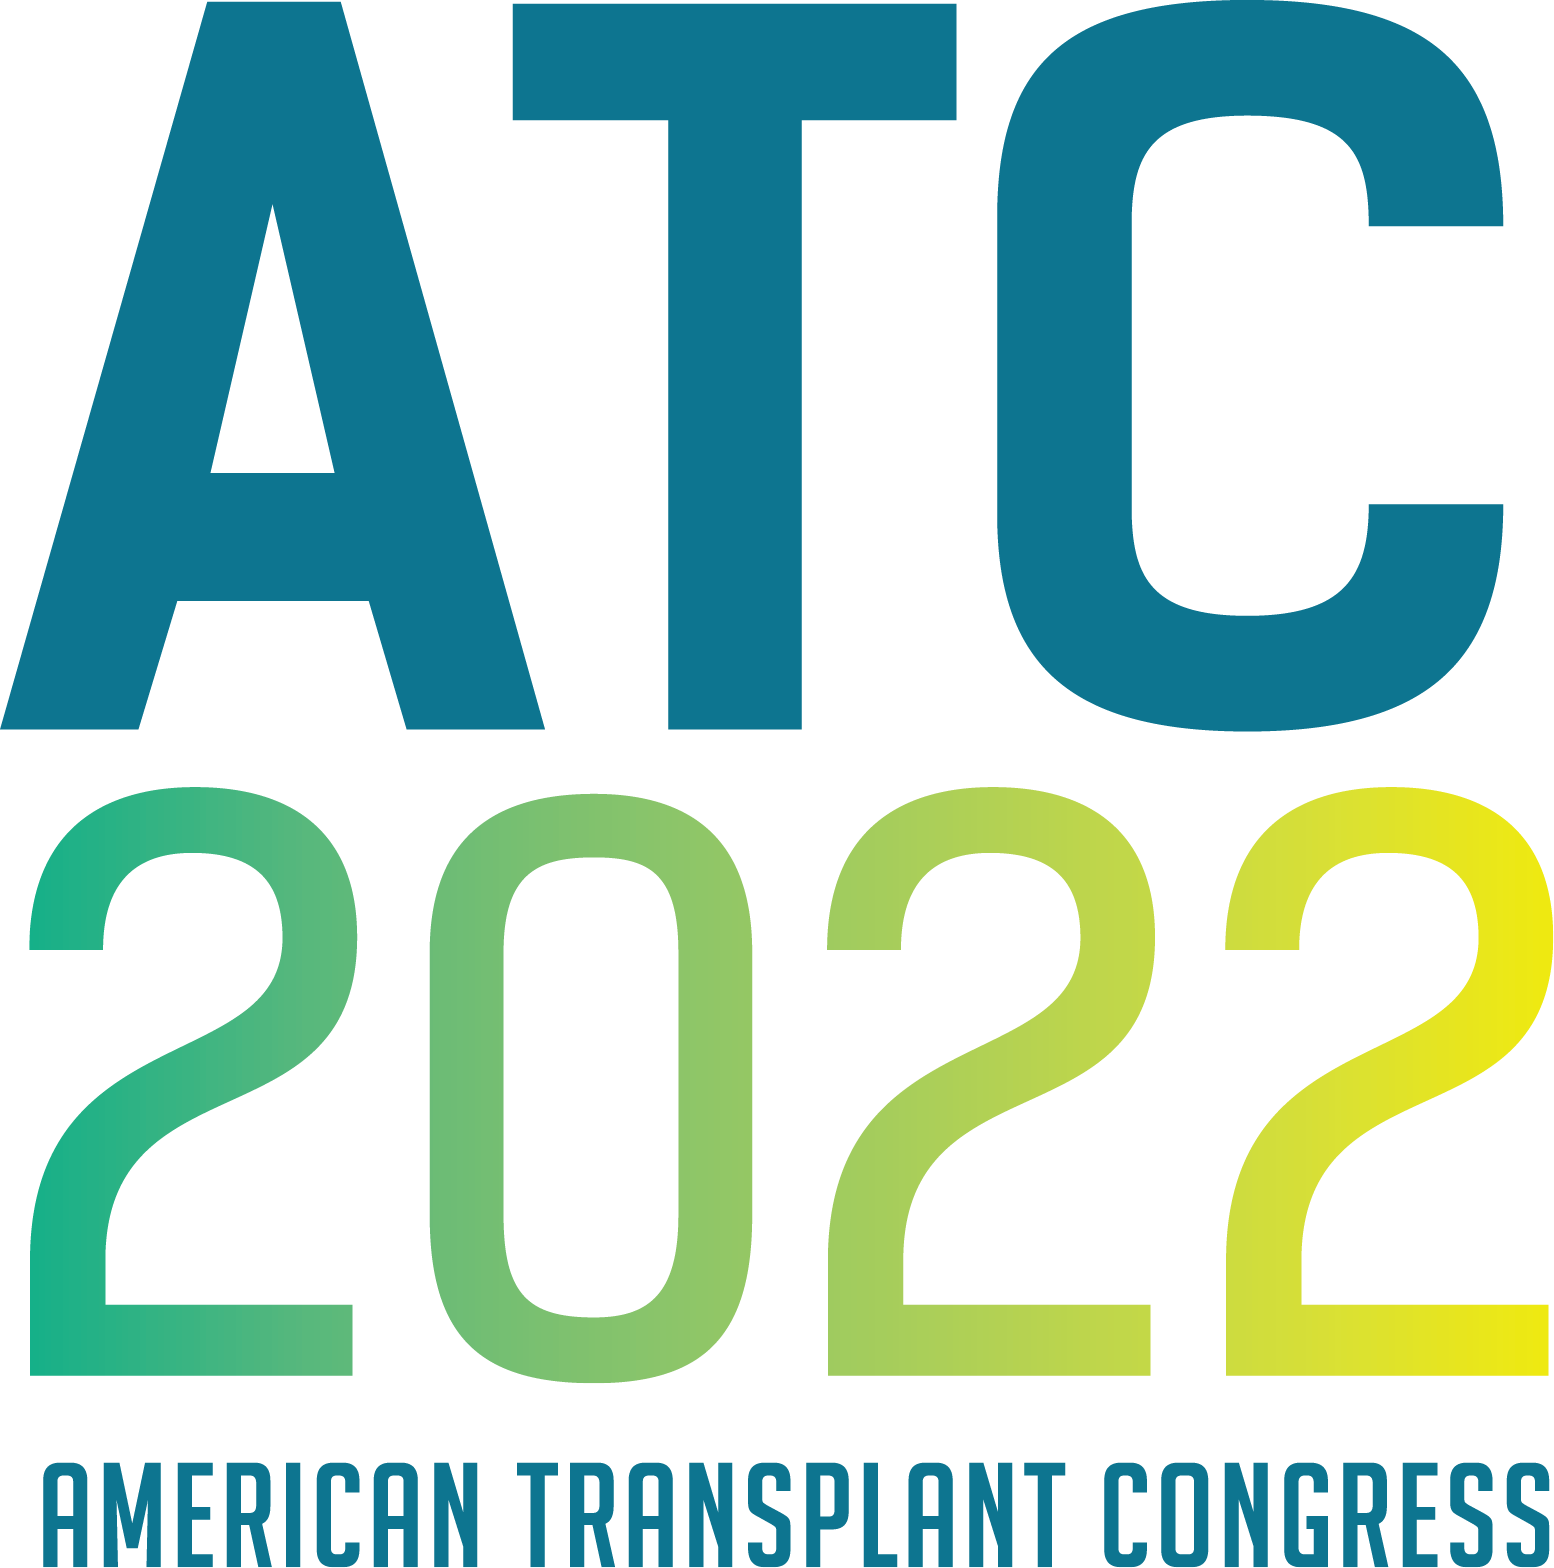 THE AMERICAN TRANSPLANT CONGRESS (ATC) 2022 TO SHOWCASE LATEST ADVANCES